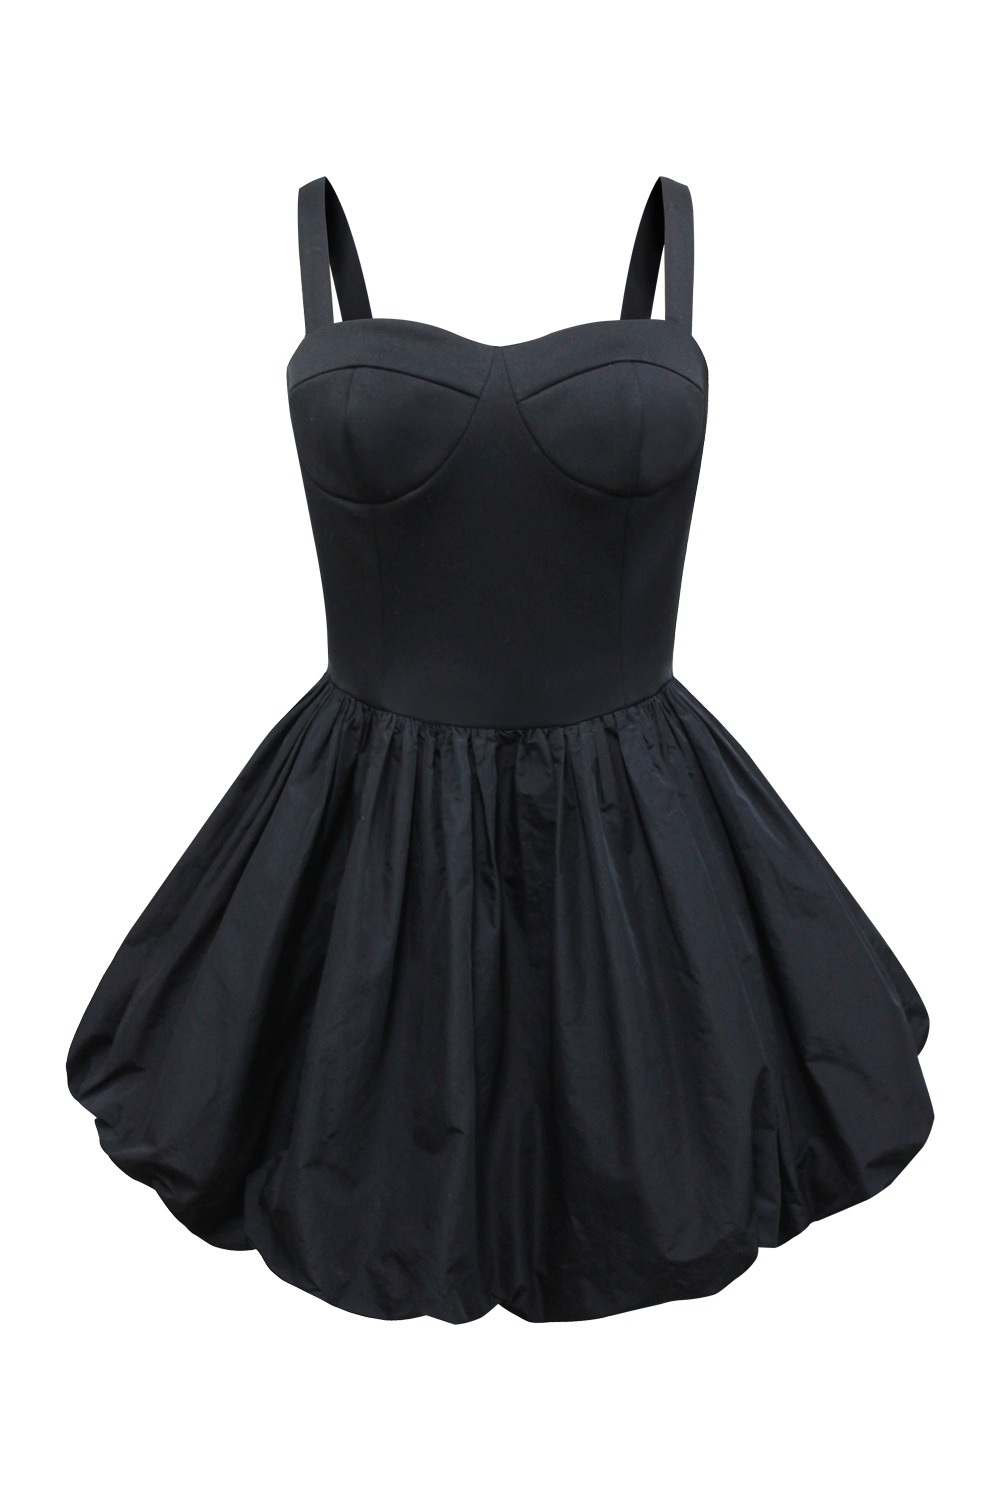 Balloon bustier dress (Black)